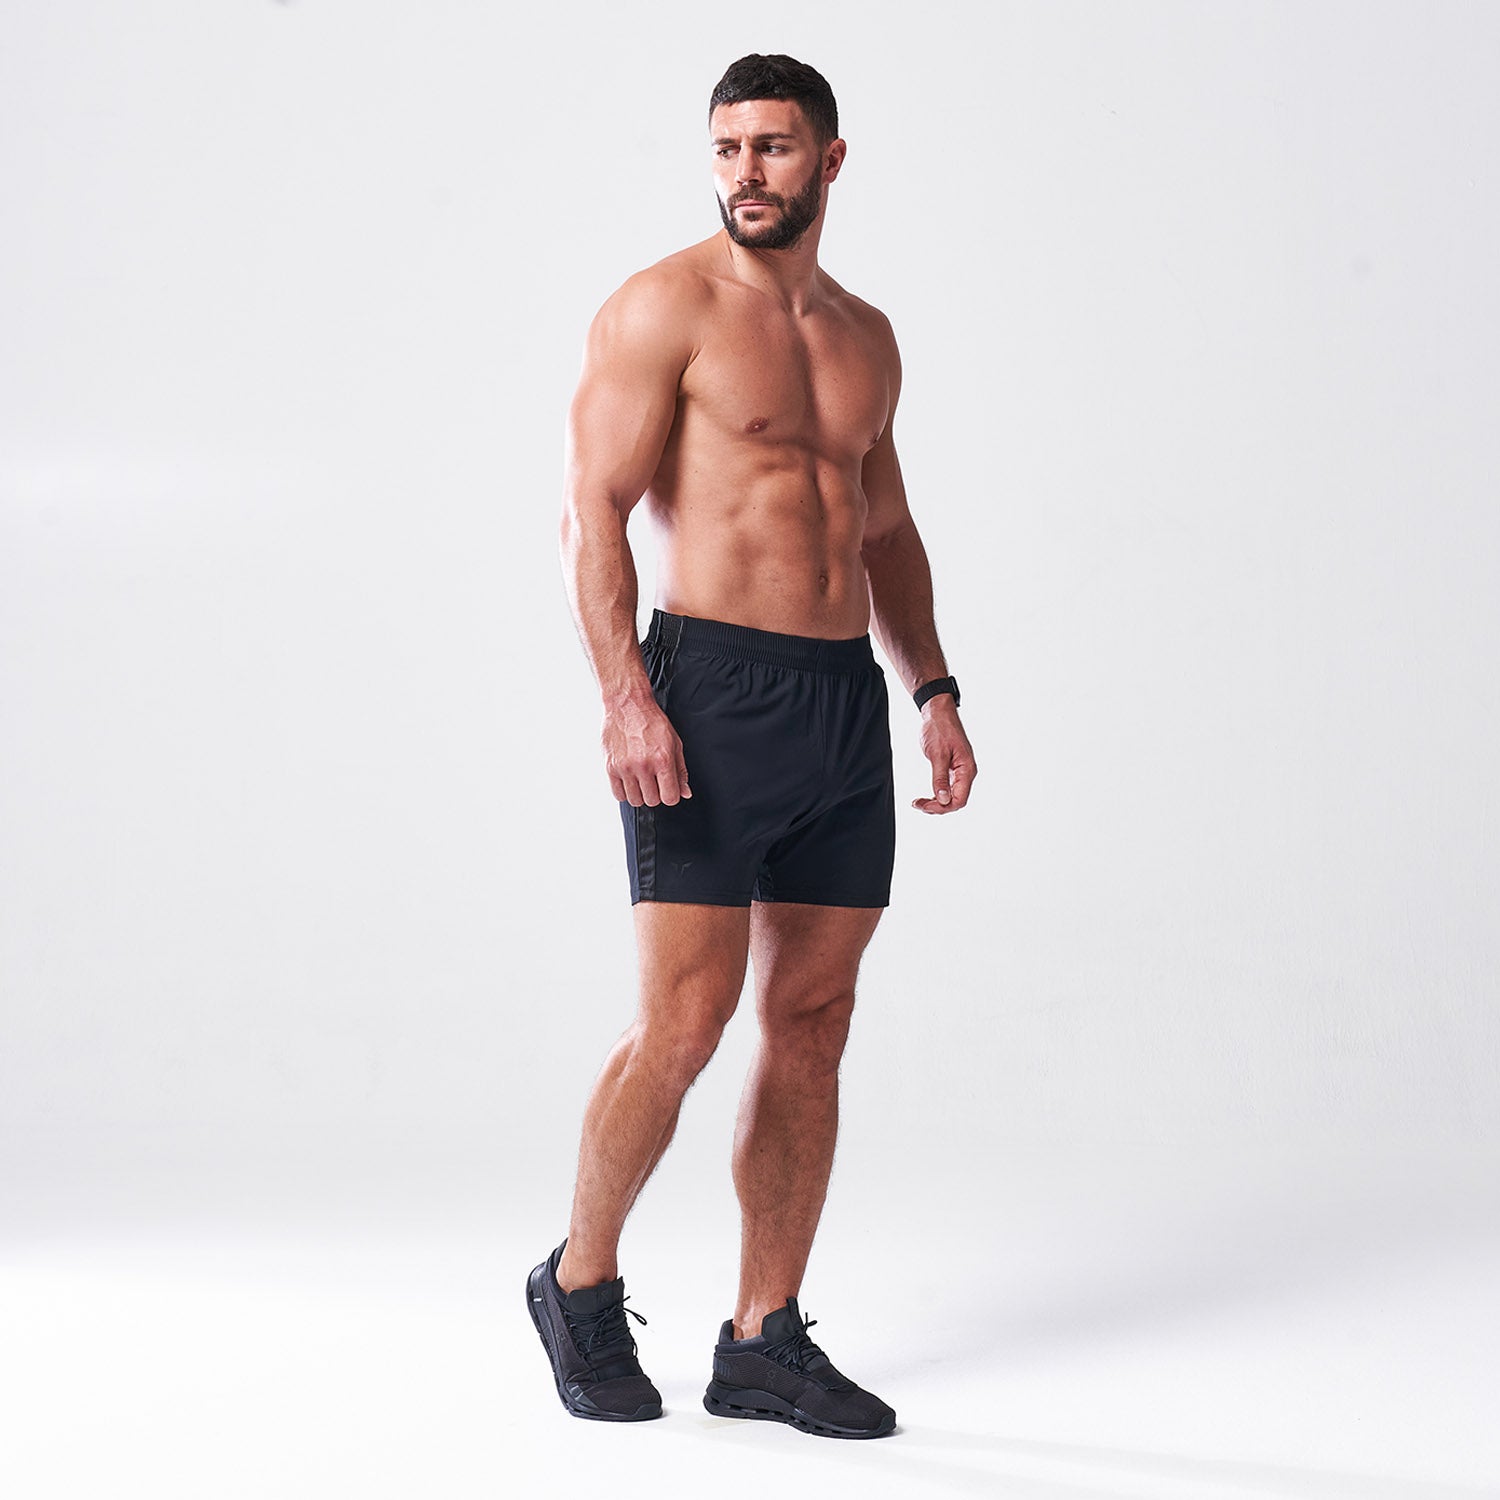 squatwolf-gym-wear-lab360-5-impact-shorts-black-workout-short-for-men